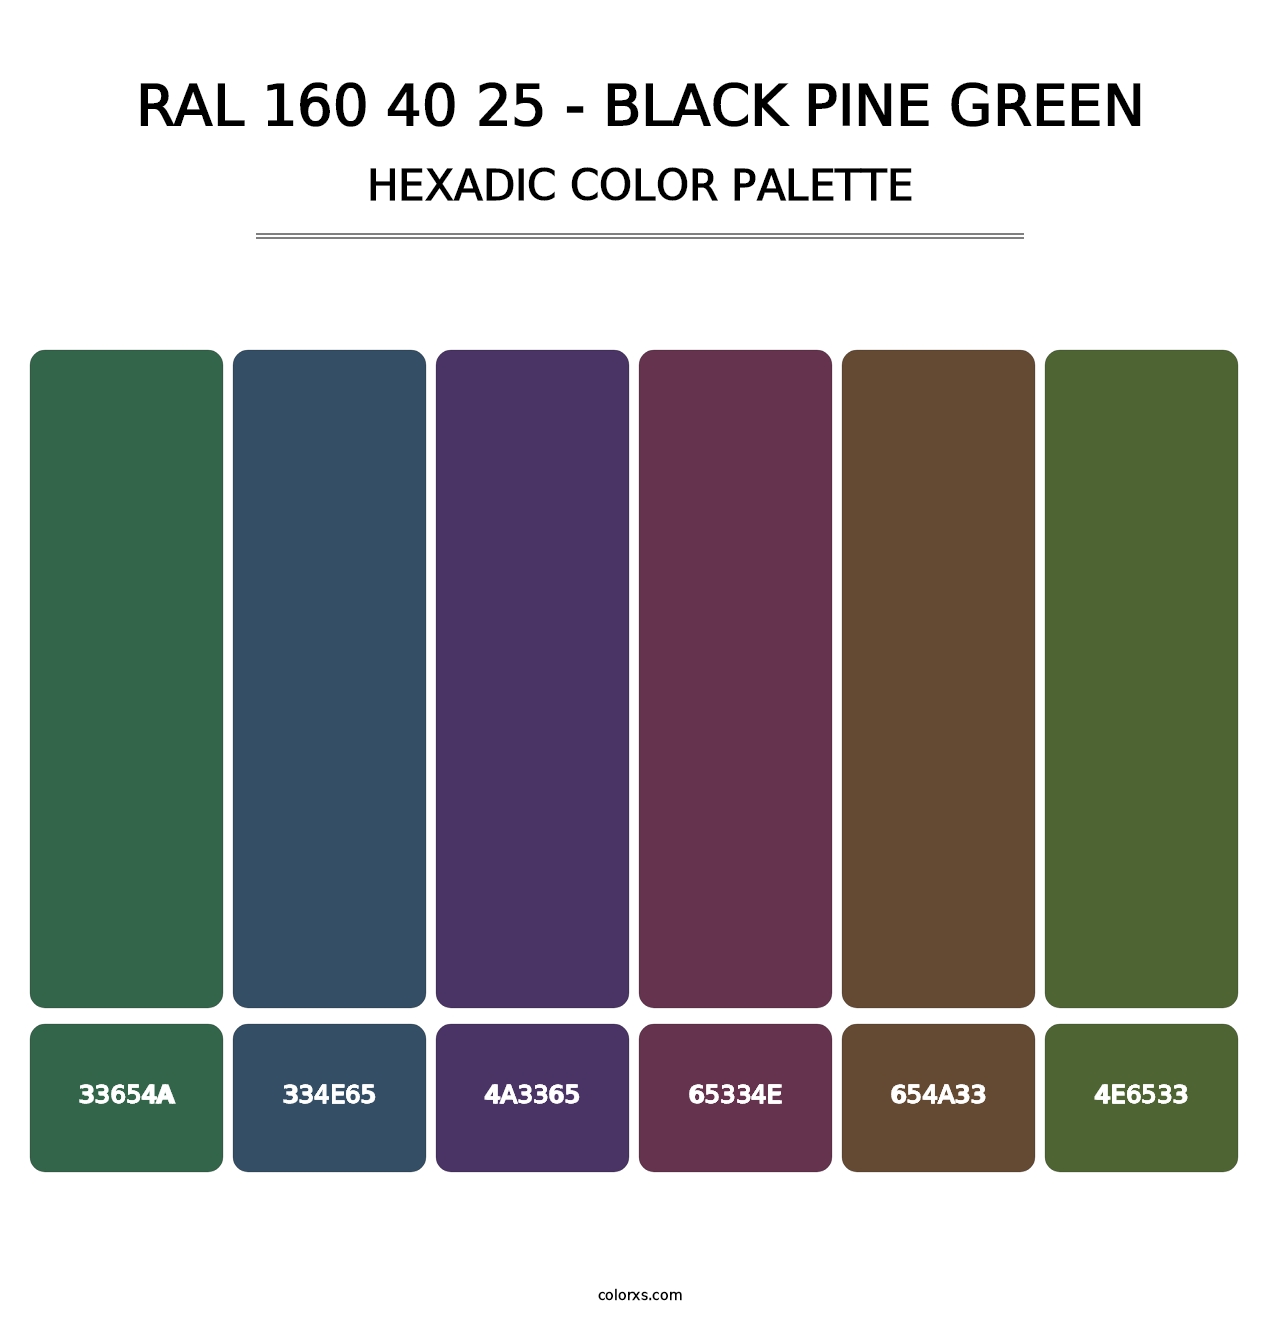 RAL 160 40 25 - Black Pine Green - Hexadic Color Palette